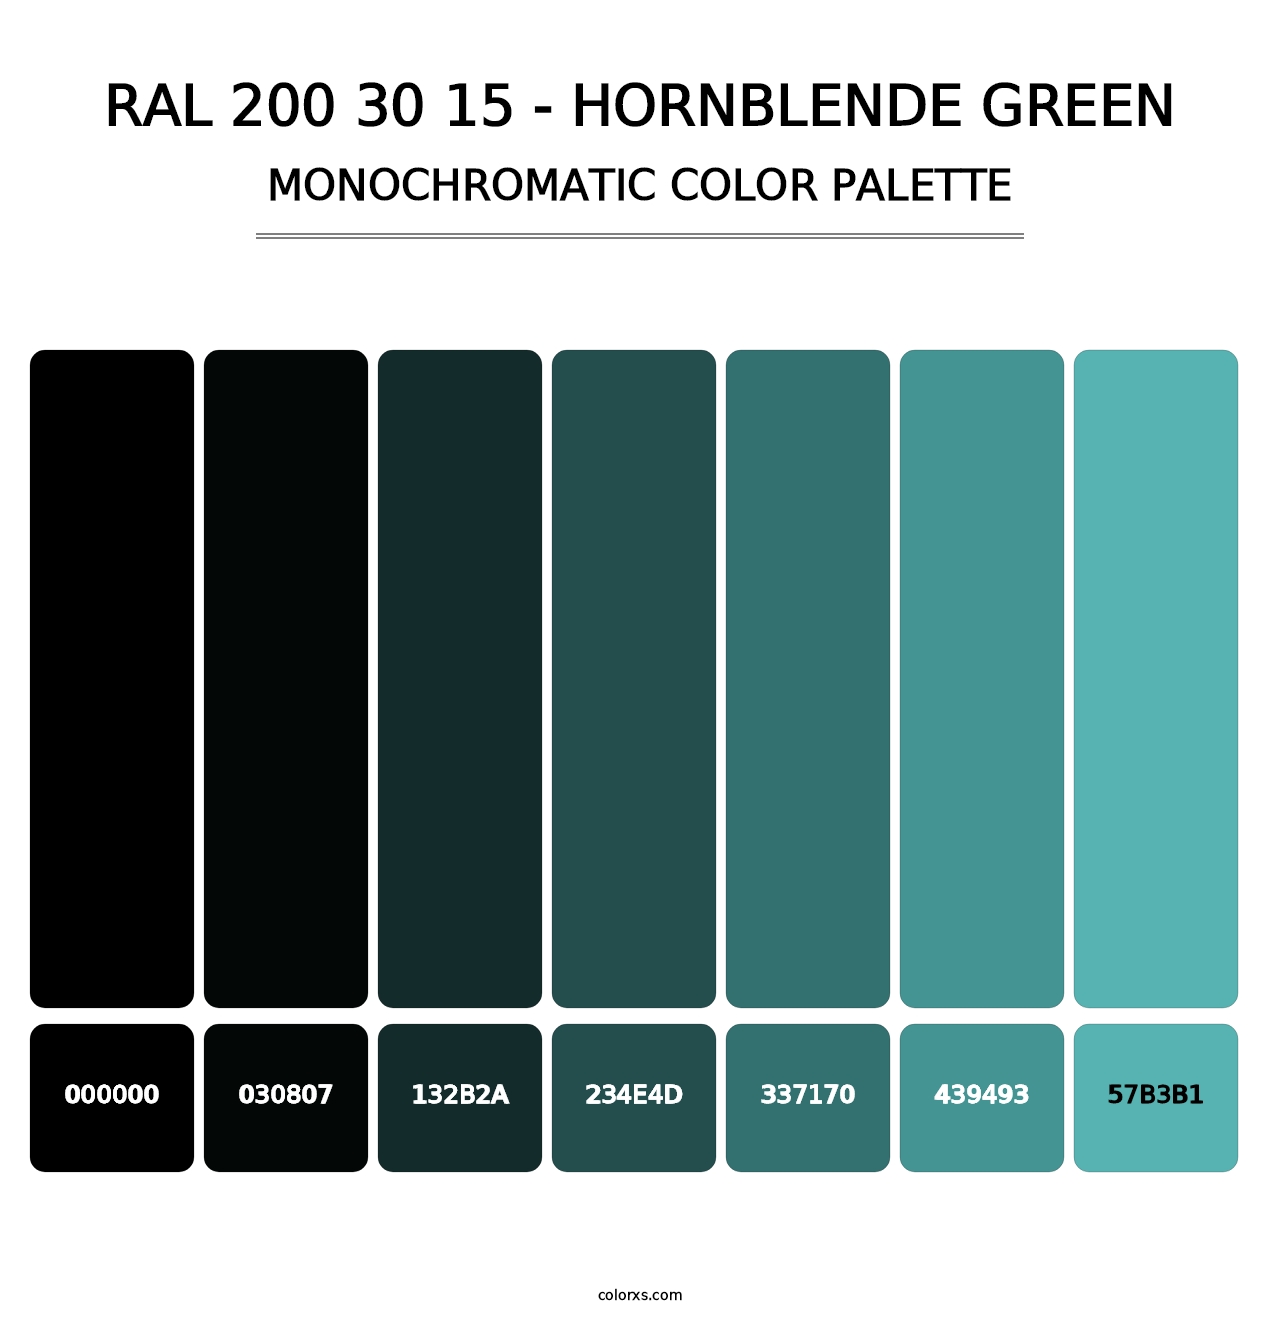 RAL 200 30 15 - Hornblende Green - Monochromatic Color Palette